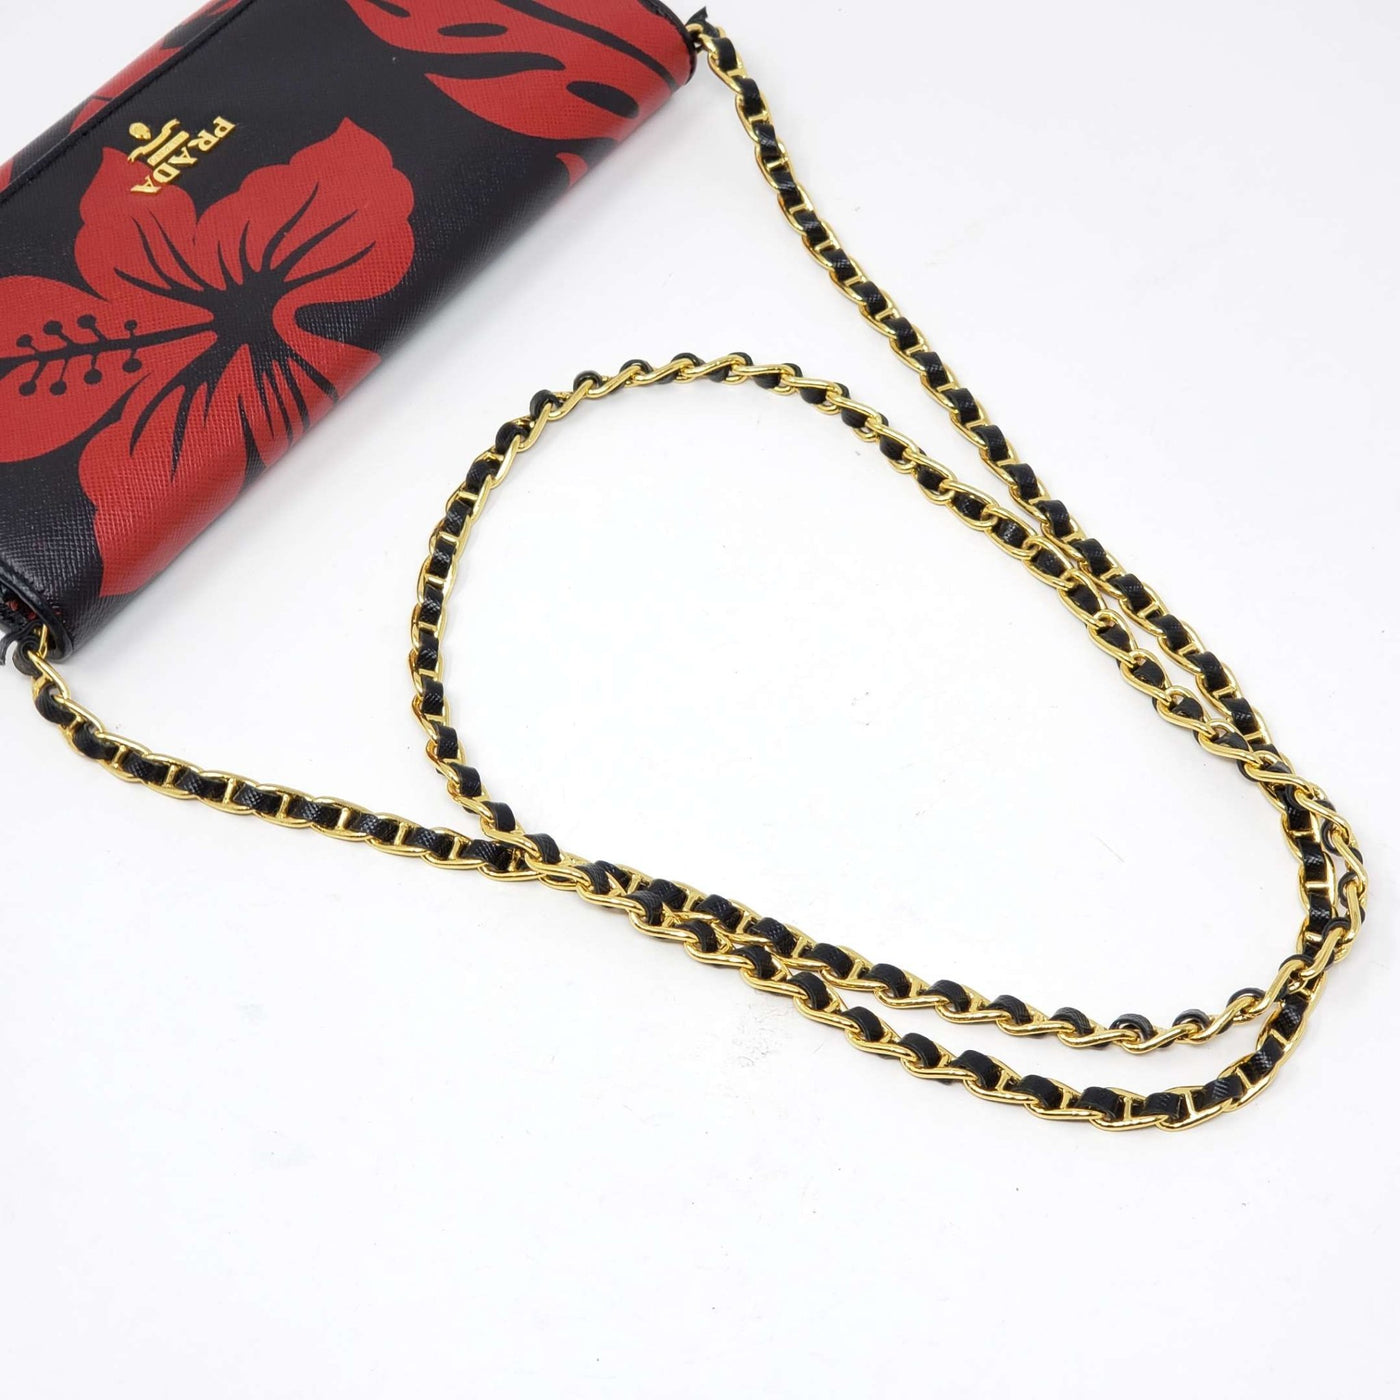 Prada Wallet on Chain Shoulder/Crossbody Bag | Luxury Cheaper.